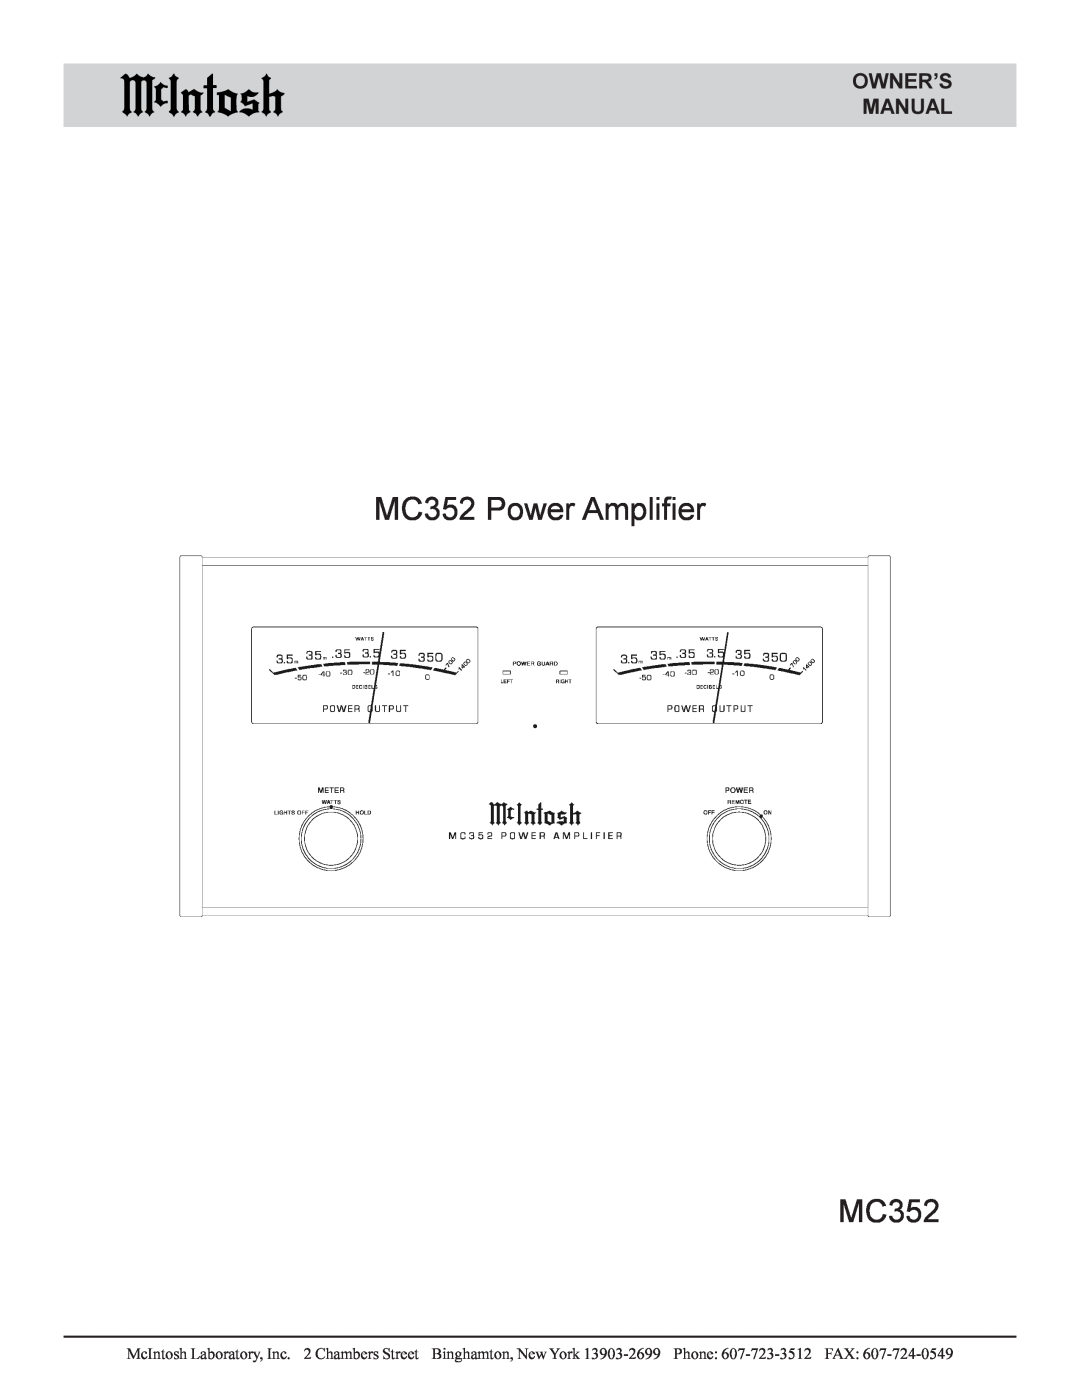 McIntosh manual MC352 Power Amplifier MC352 